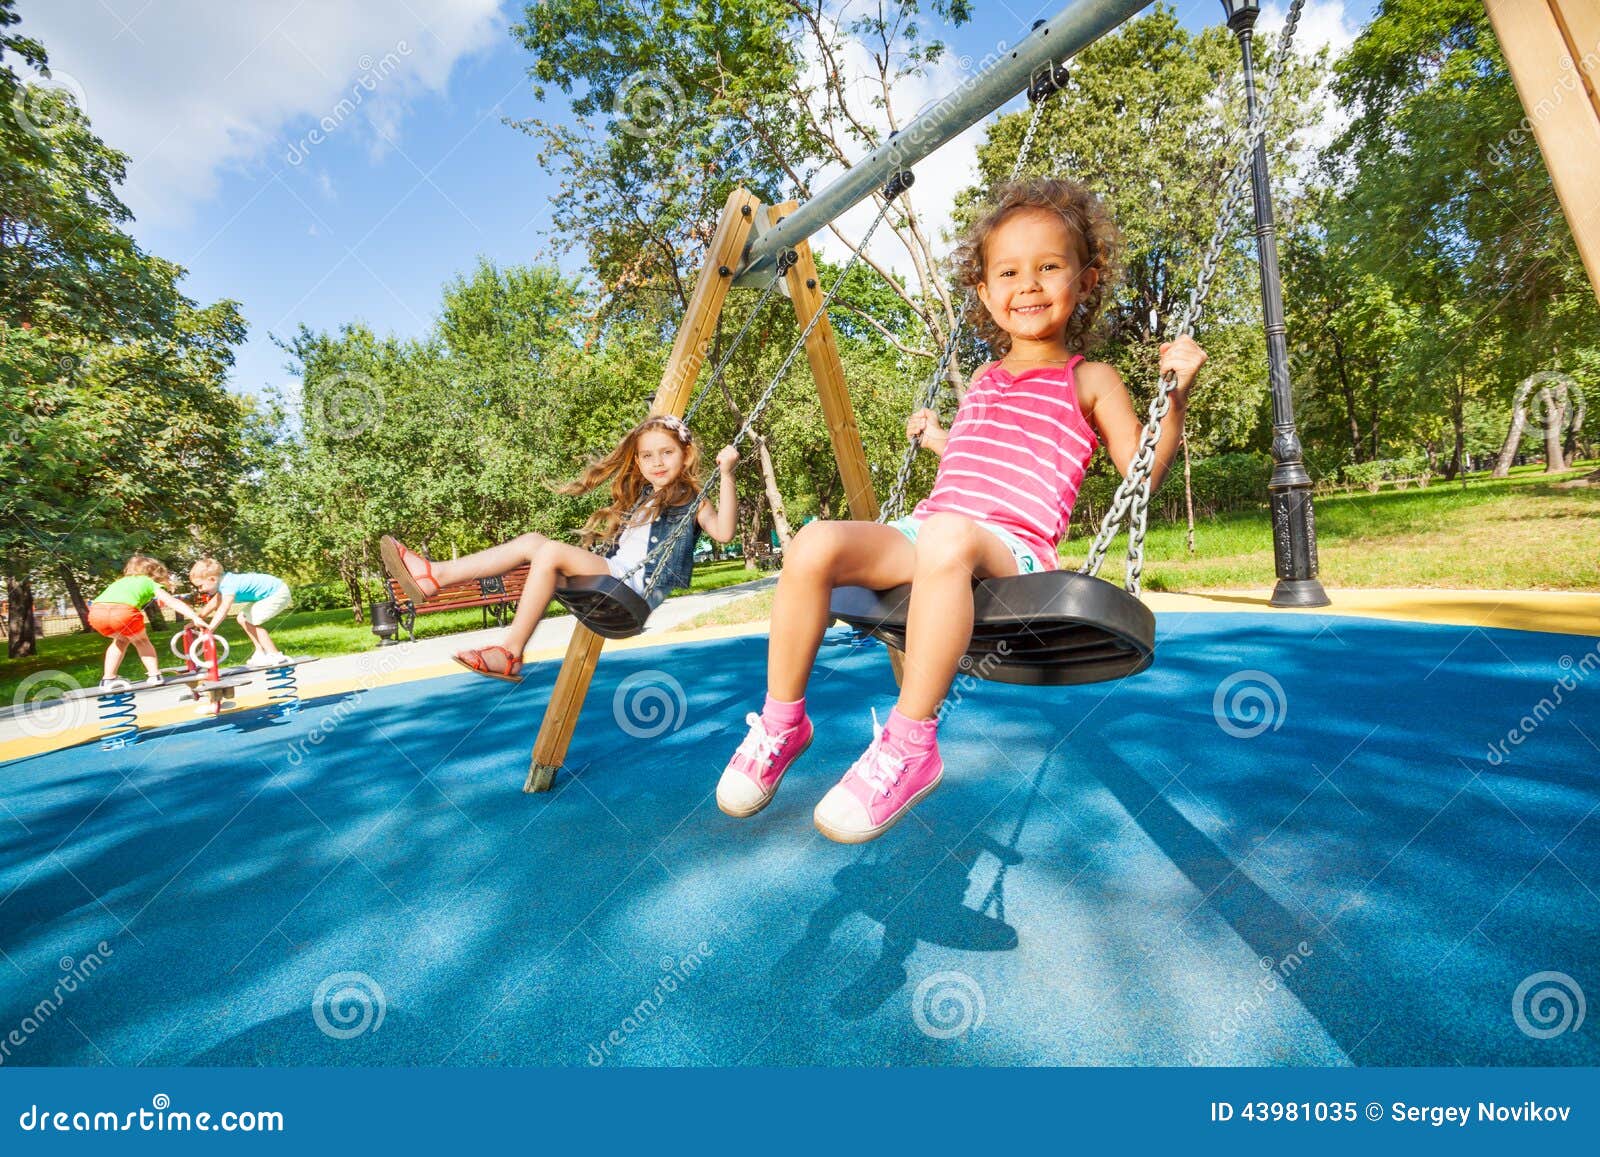 kids swing on playground